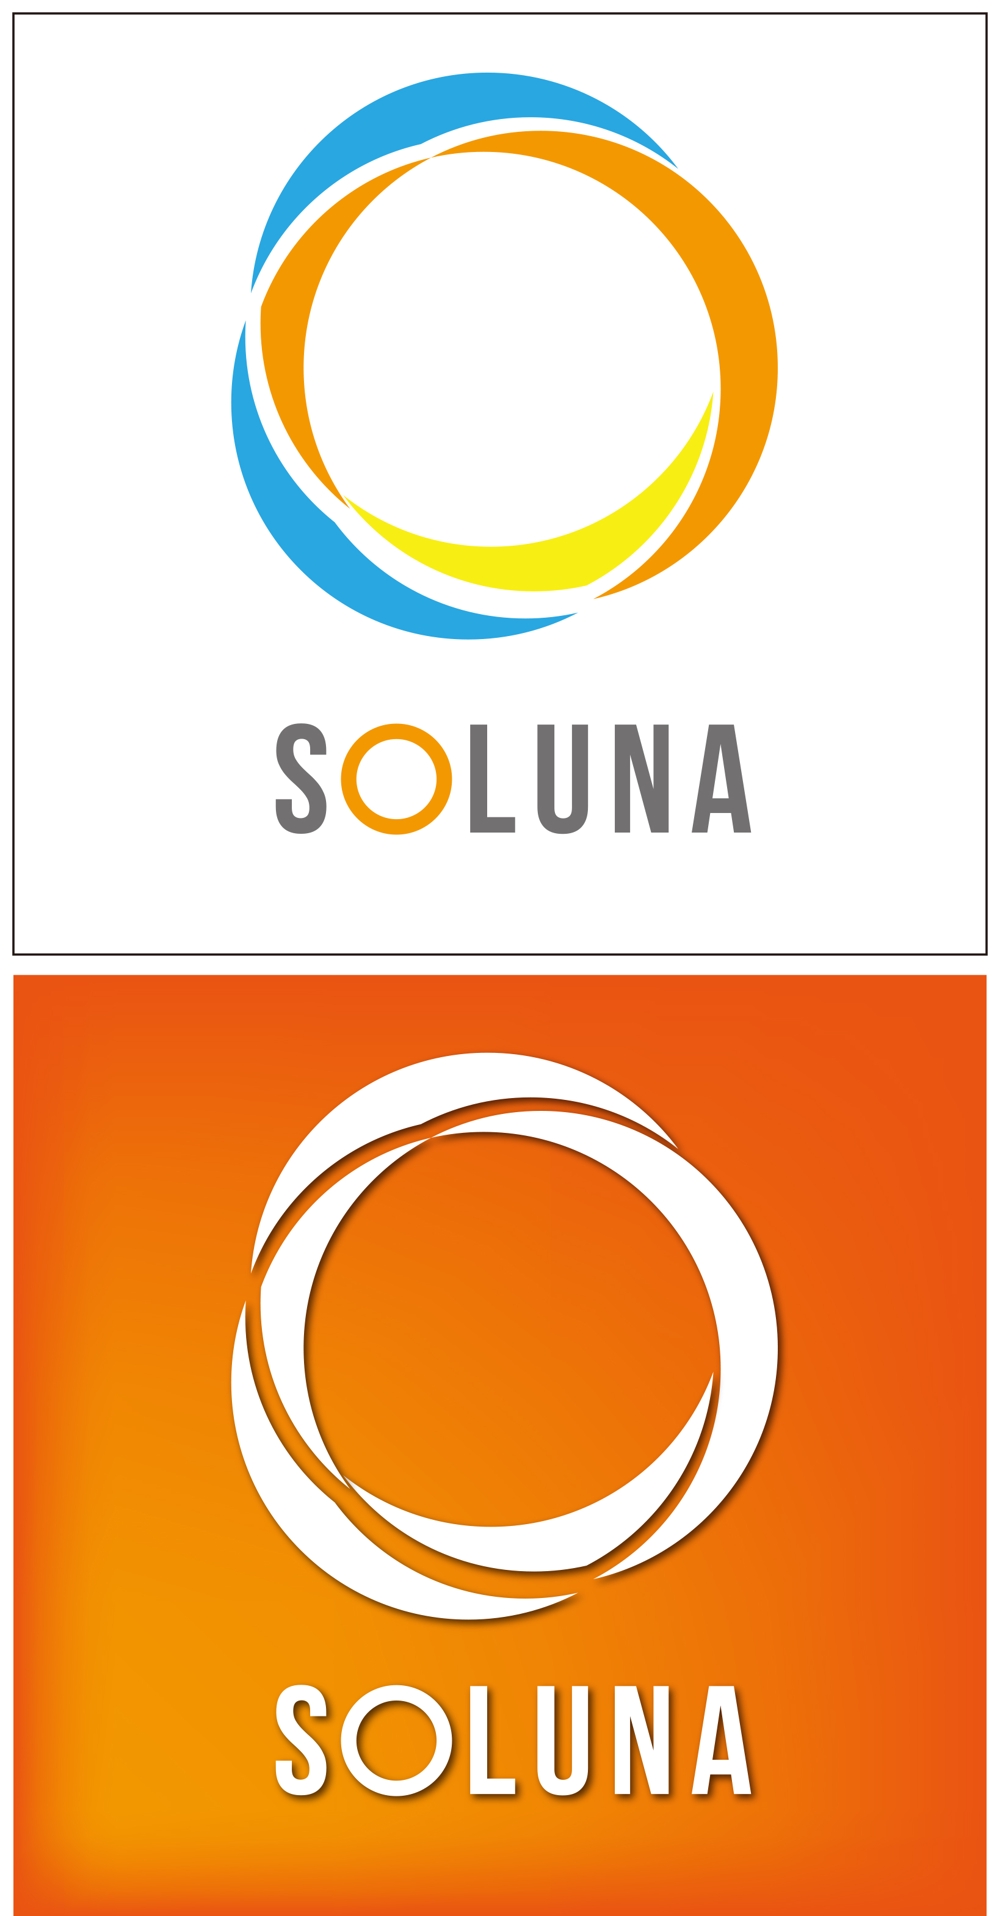 SOLUNA-001.jpg